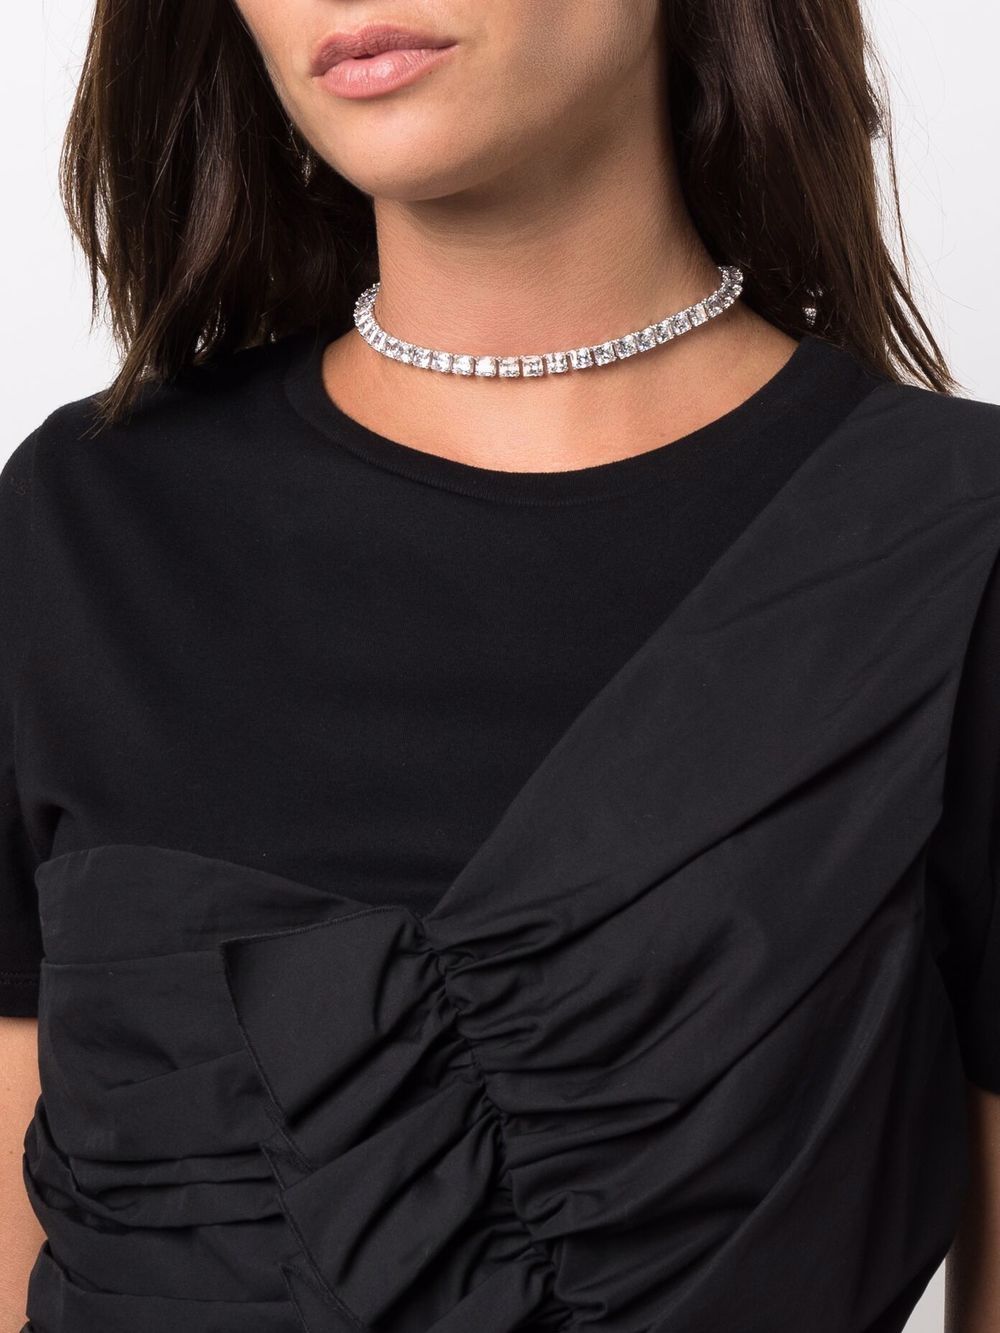 Millenia square Swarovski embellished necklace | Farfetch (US)